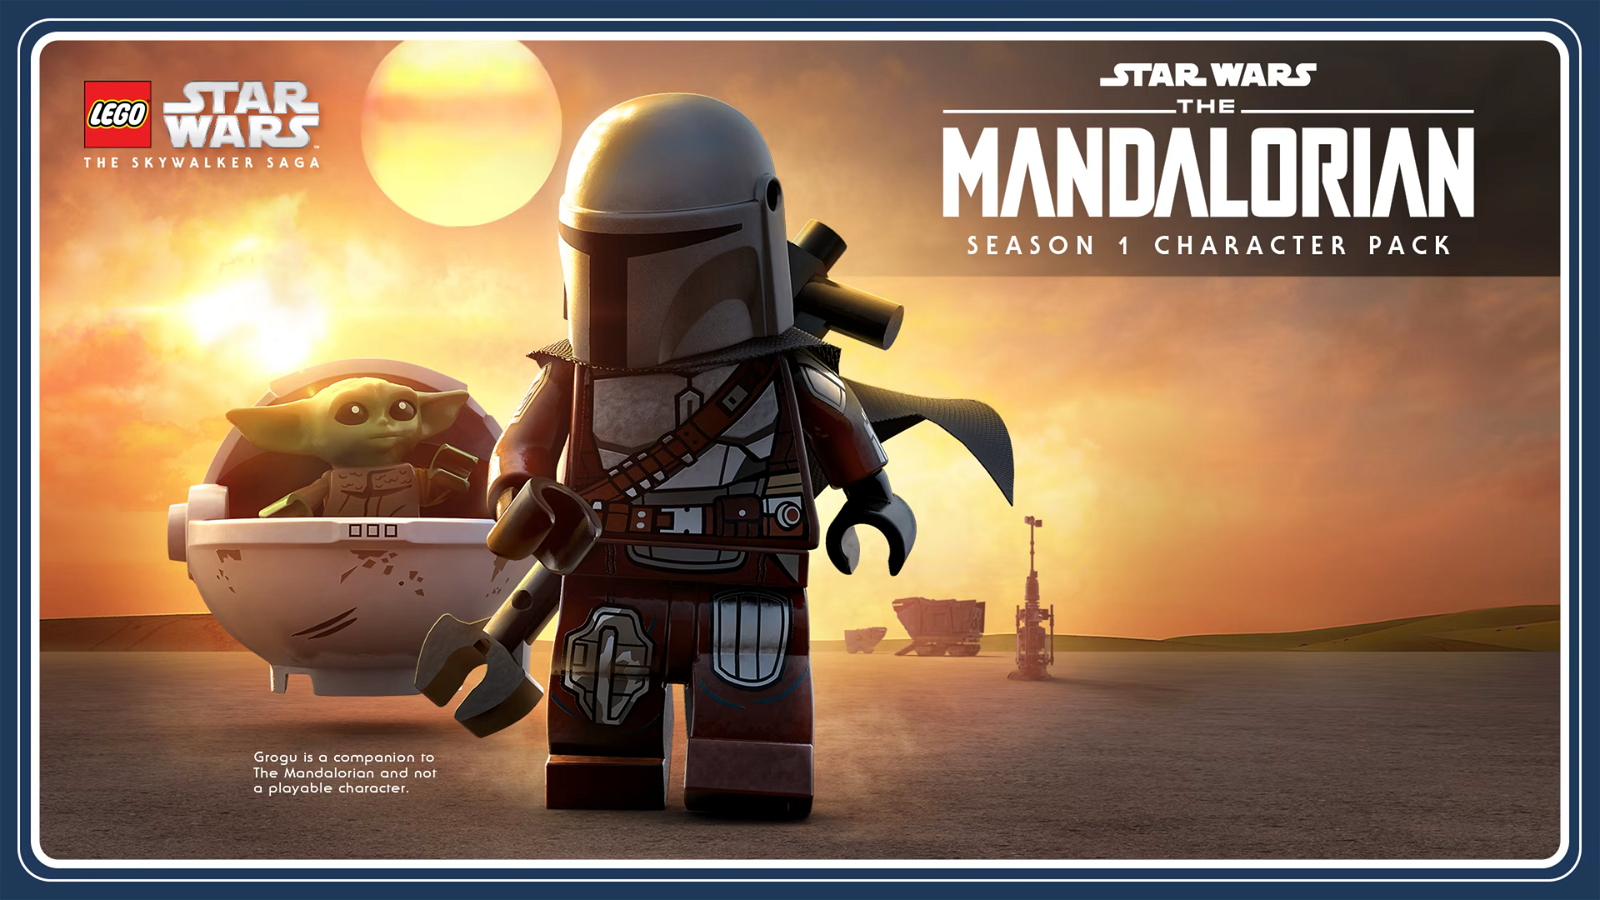 LEGO Star Wars: The Skywalker Saga - The Mandalorian DLC